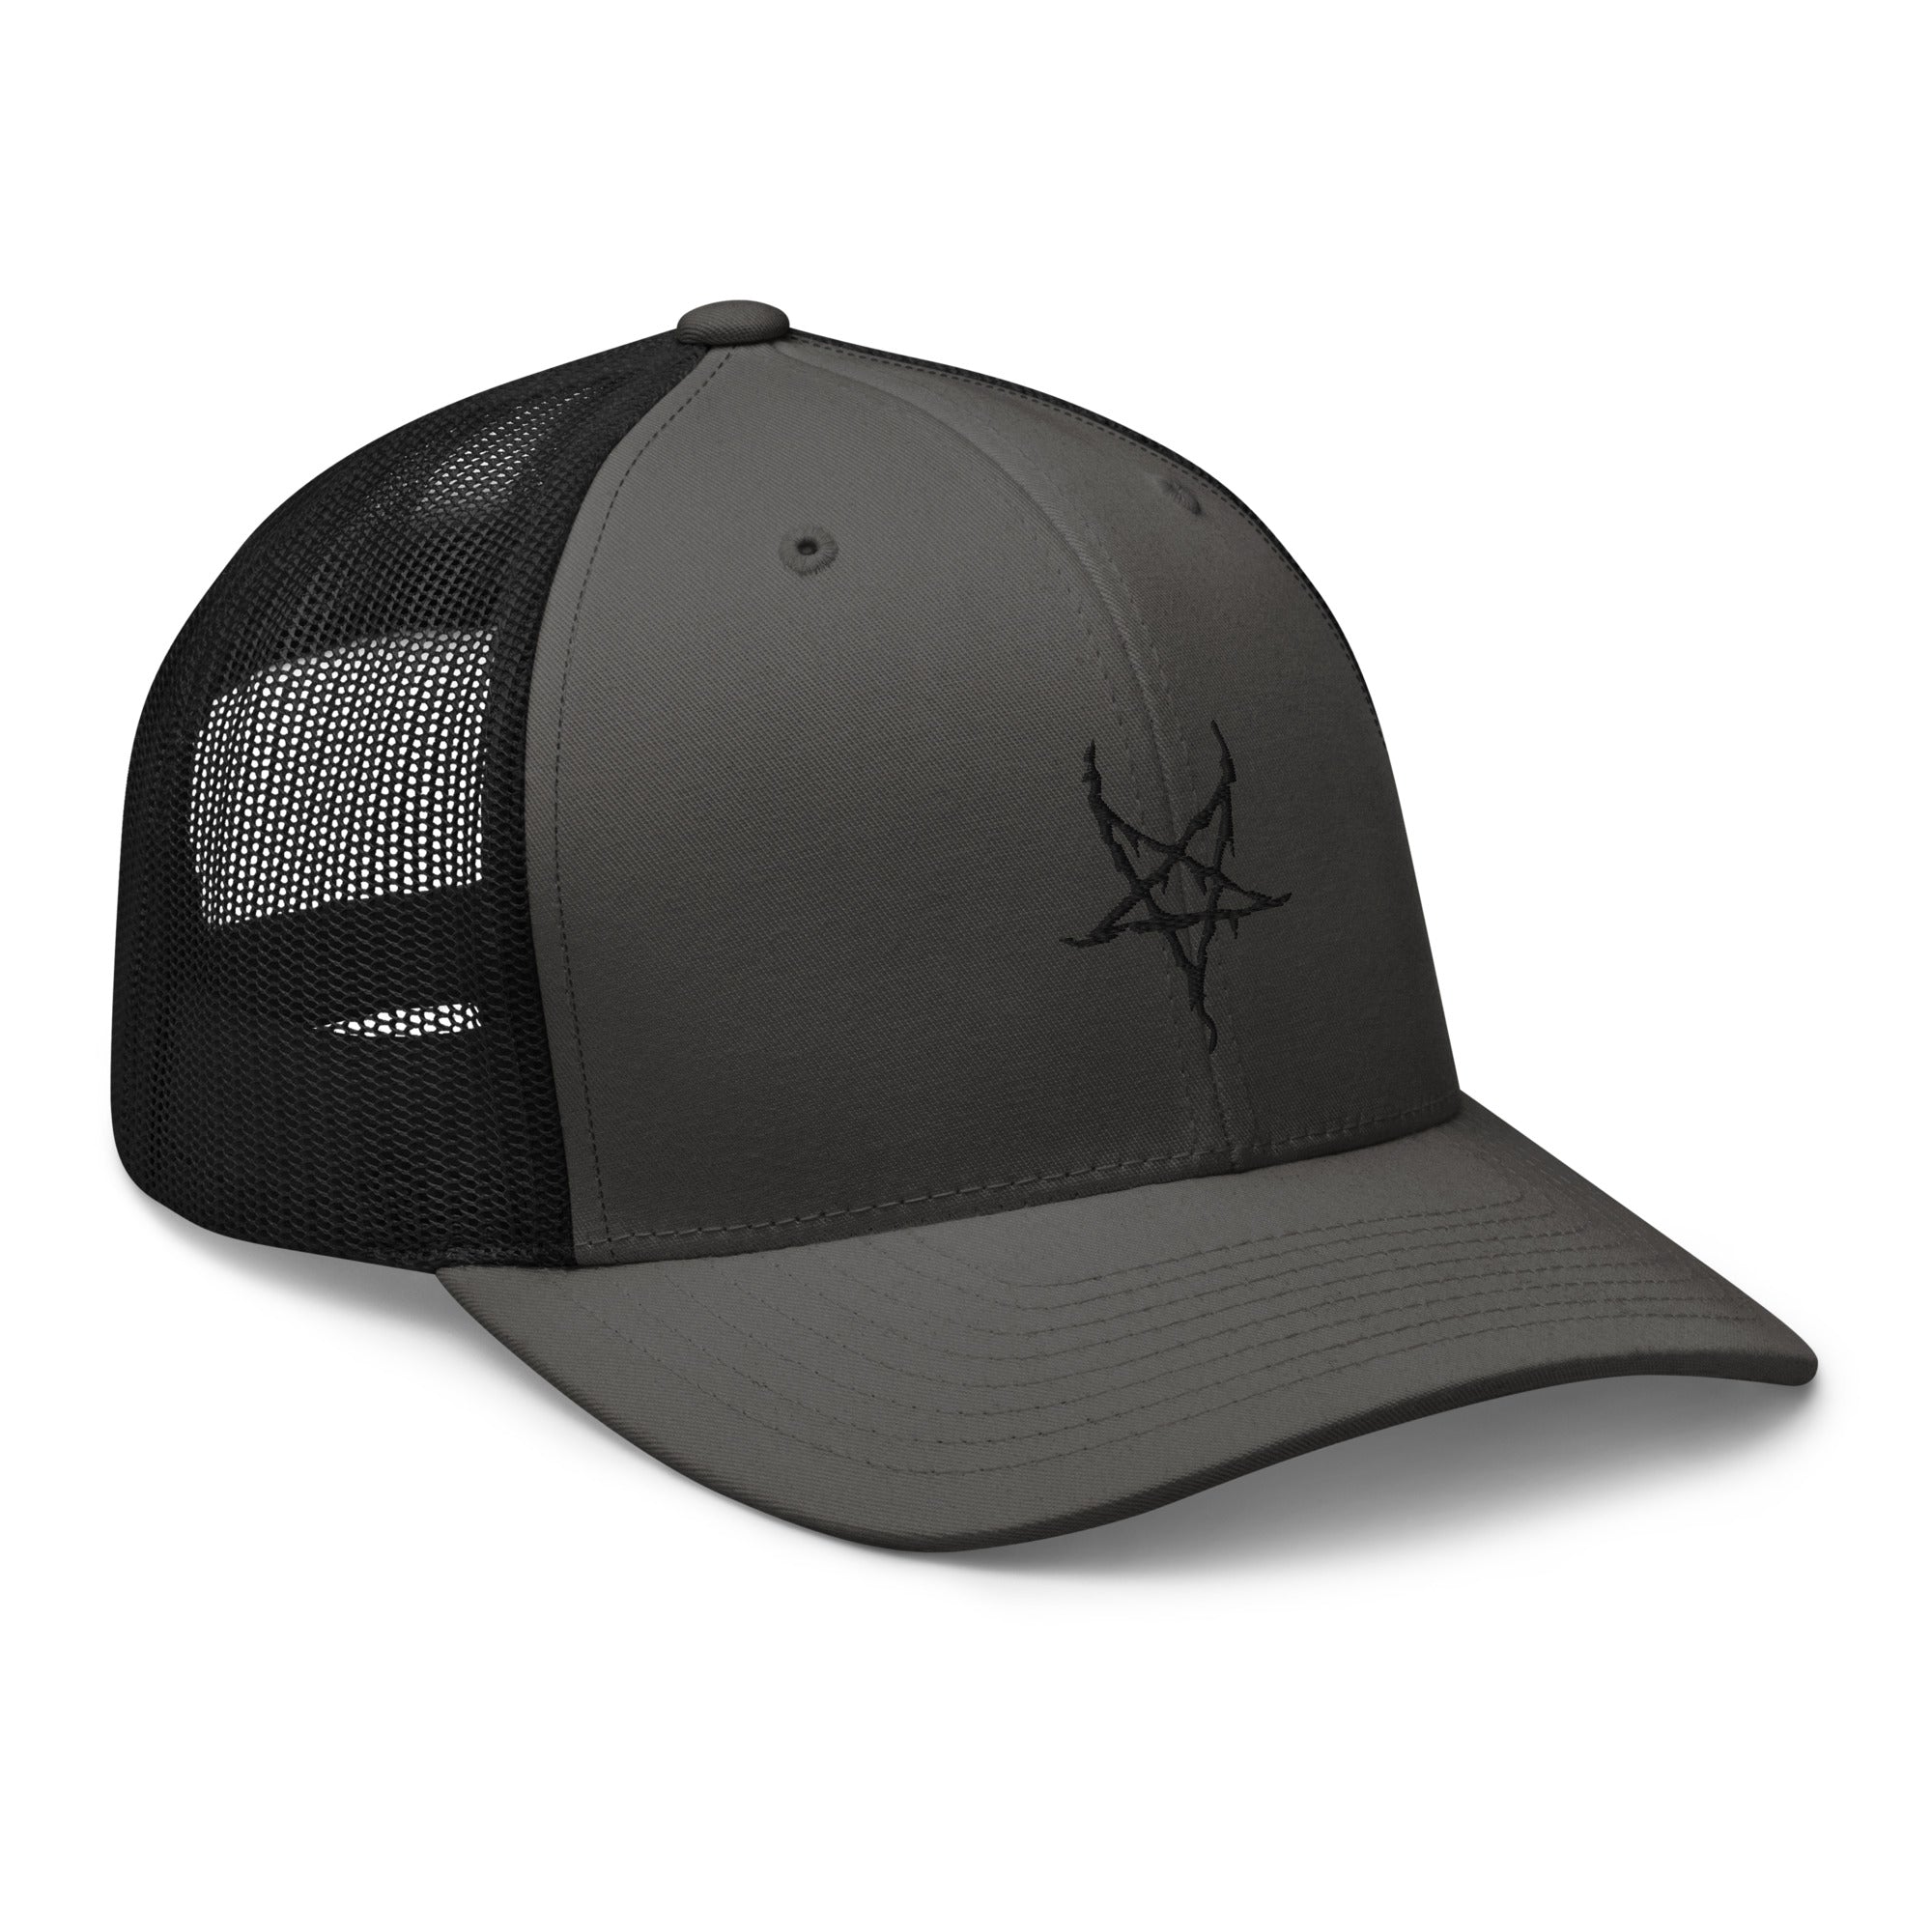 Black Inverted Pentagram Black Metal Style Embroidered Trucker Cap Snapback Hat